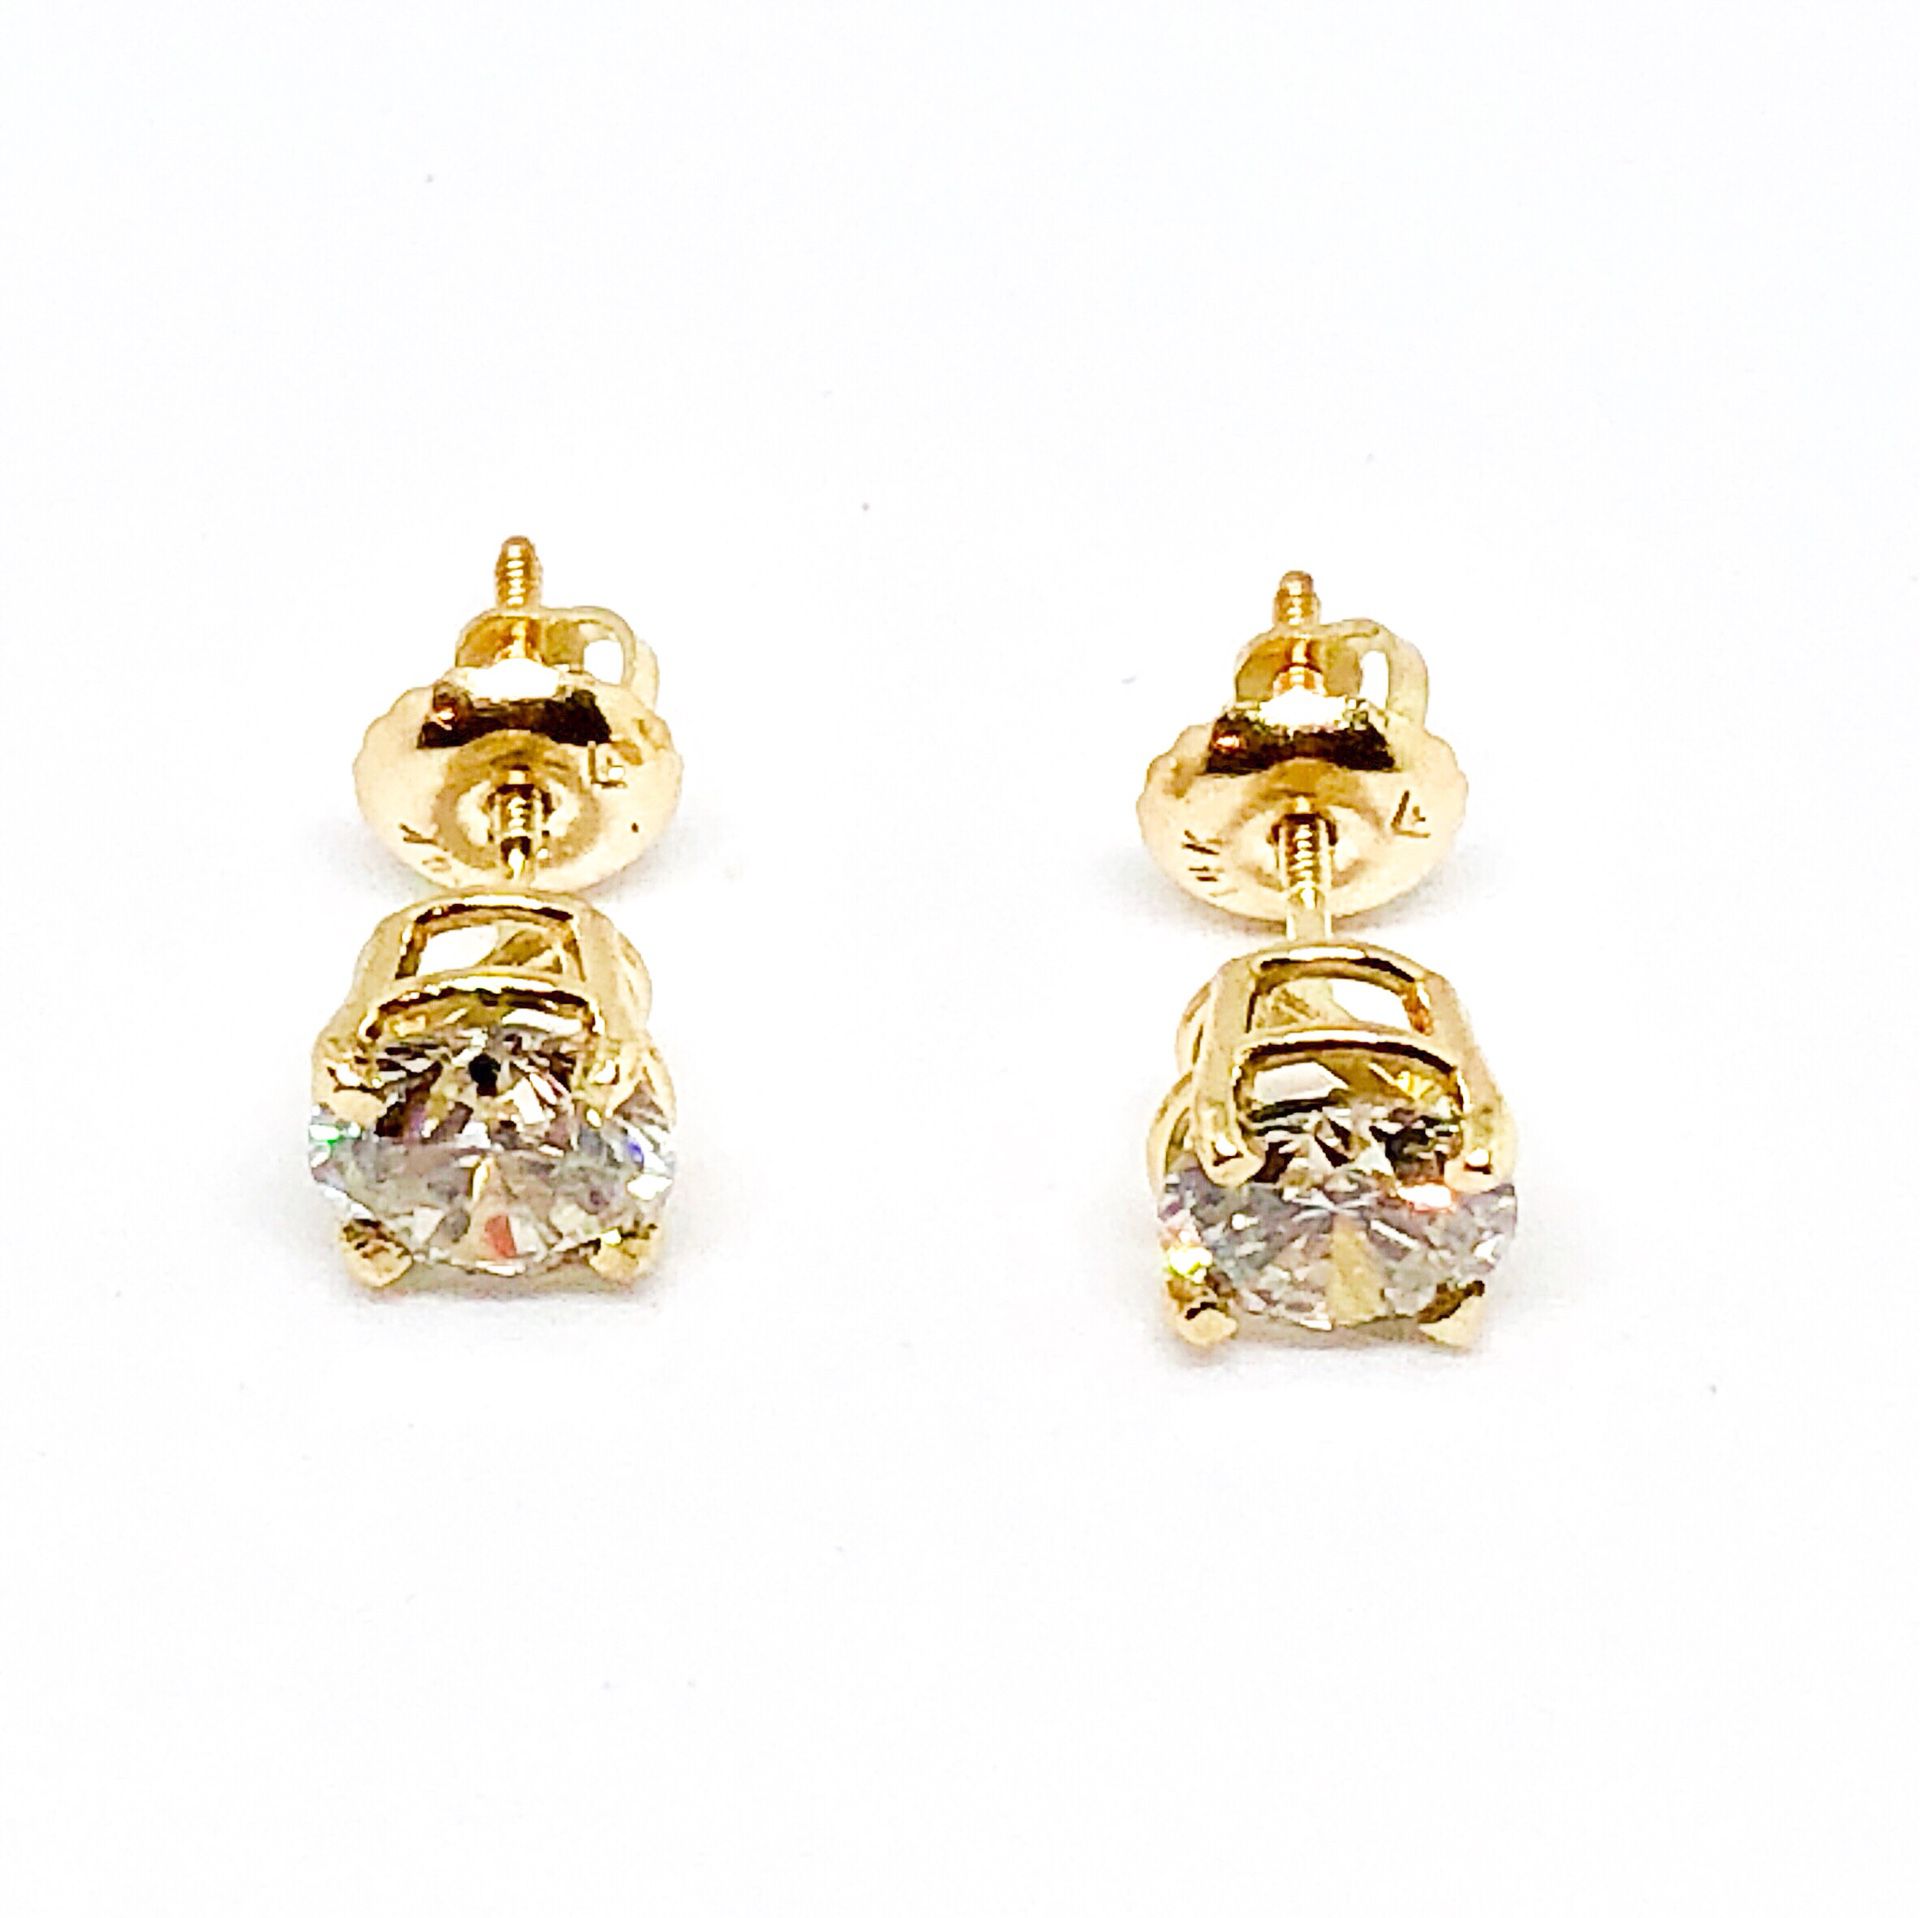 1 carat studs diamonds earring $1590 💎70% off apprasle $4500